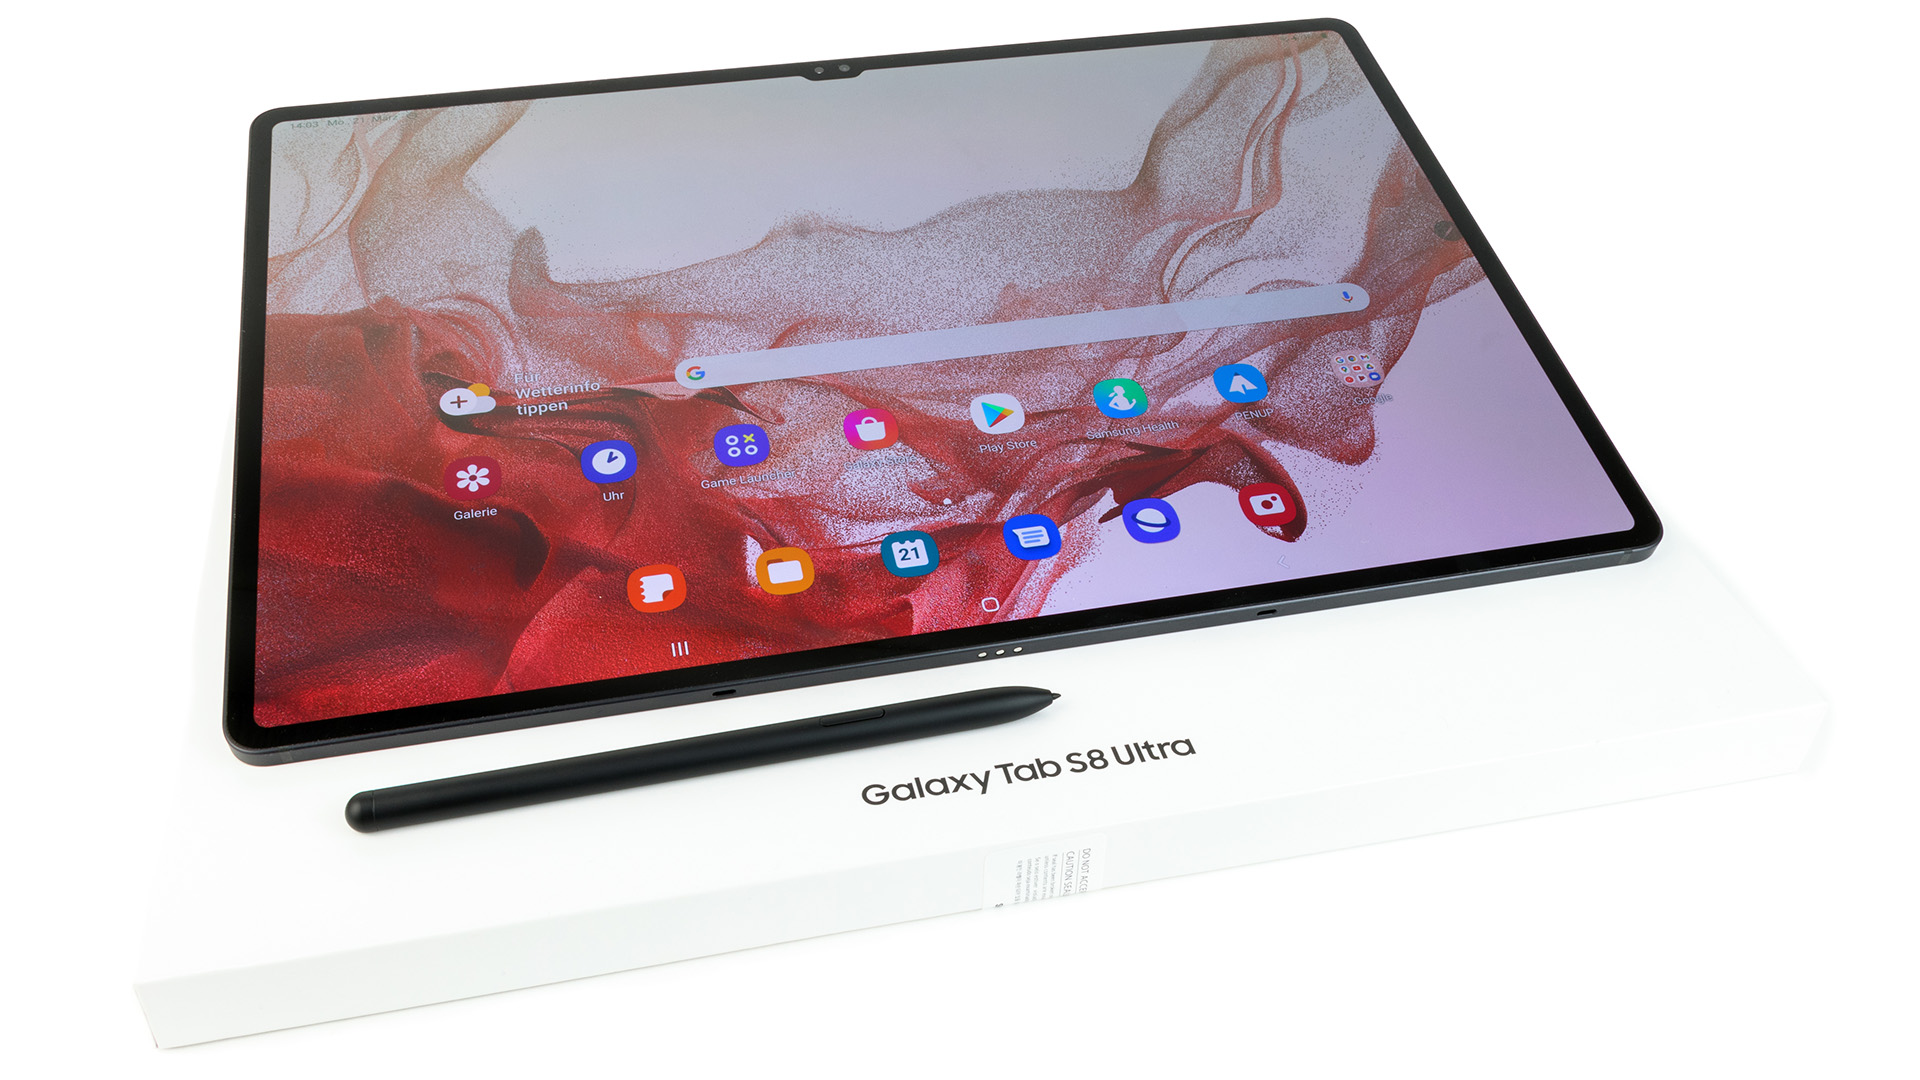 Samsung Galaxy Tab A Tablette tactile 9,7 (24,64 cm) (16 Go